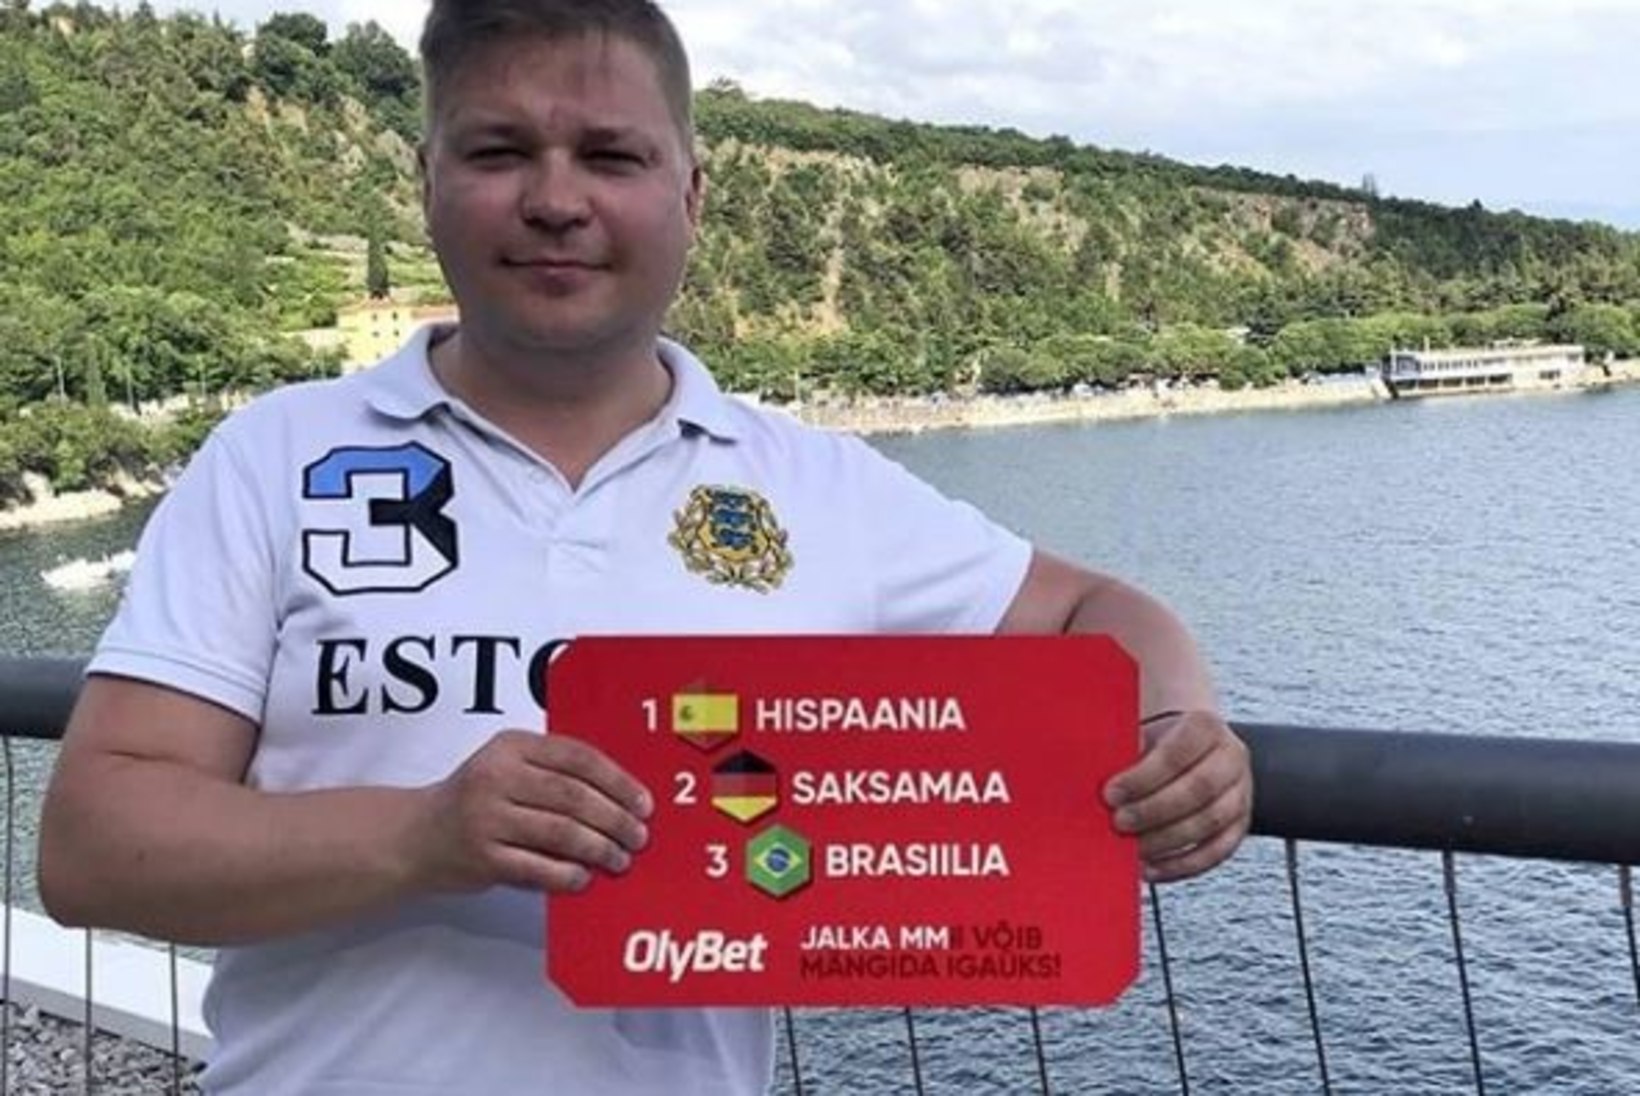 Telenägu Erkki Sarapuu: vaatasime jalgpalli rannas, aga internet sai kiiresti otsa!